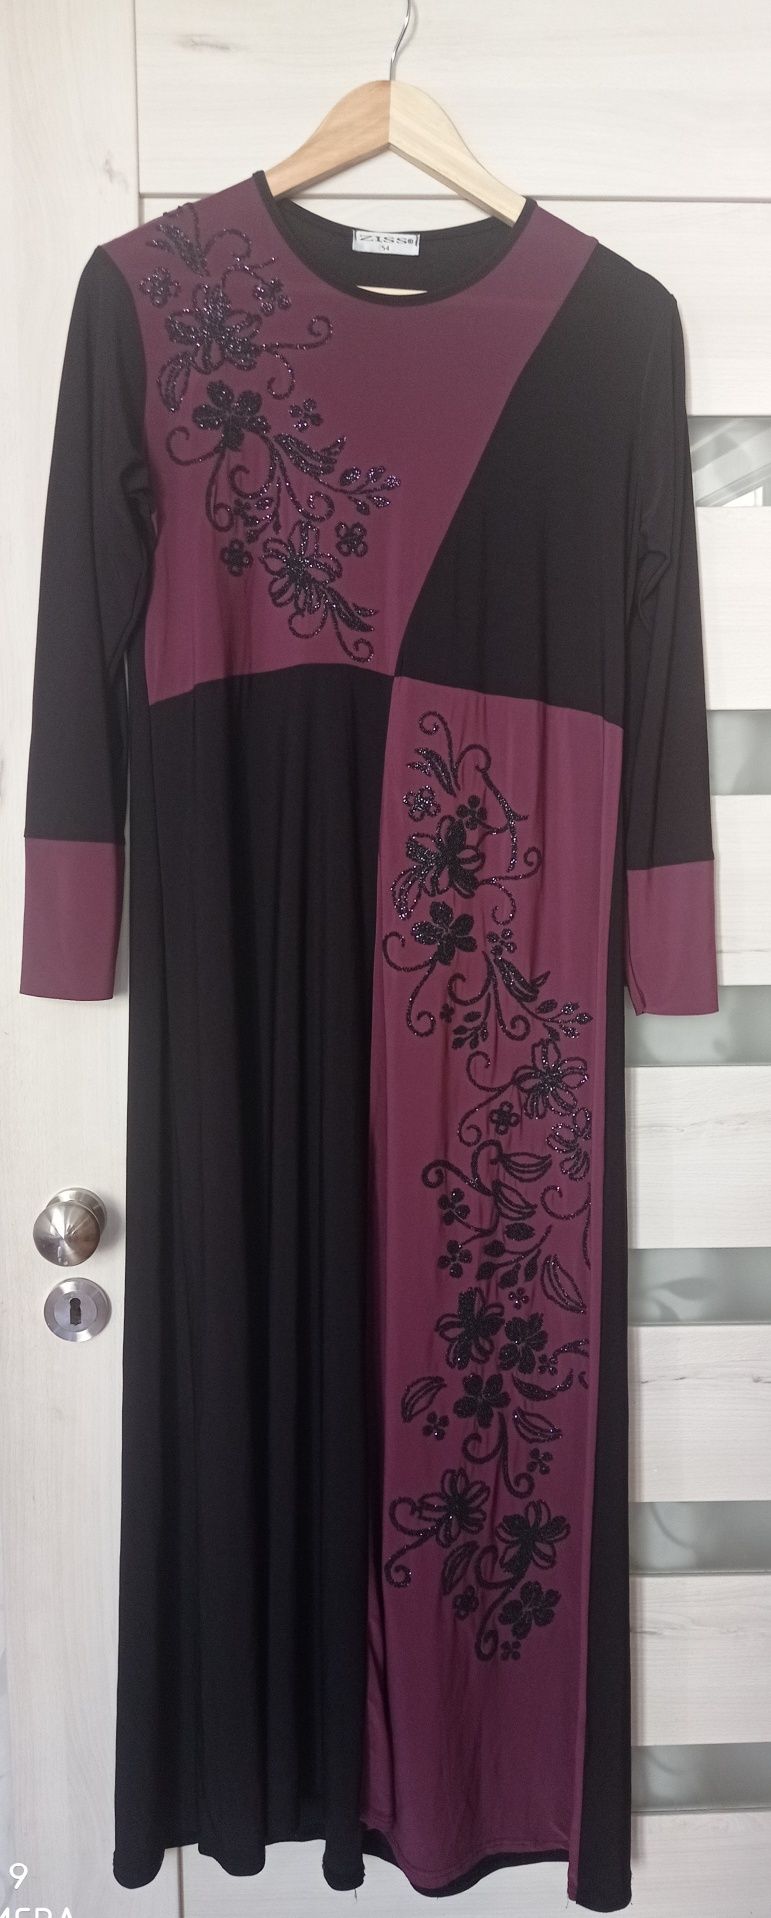 Suknia rozmiar 54 ciemny fiolet i czarny. Wzór z drobnych koralików.